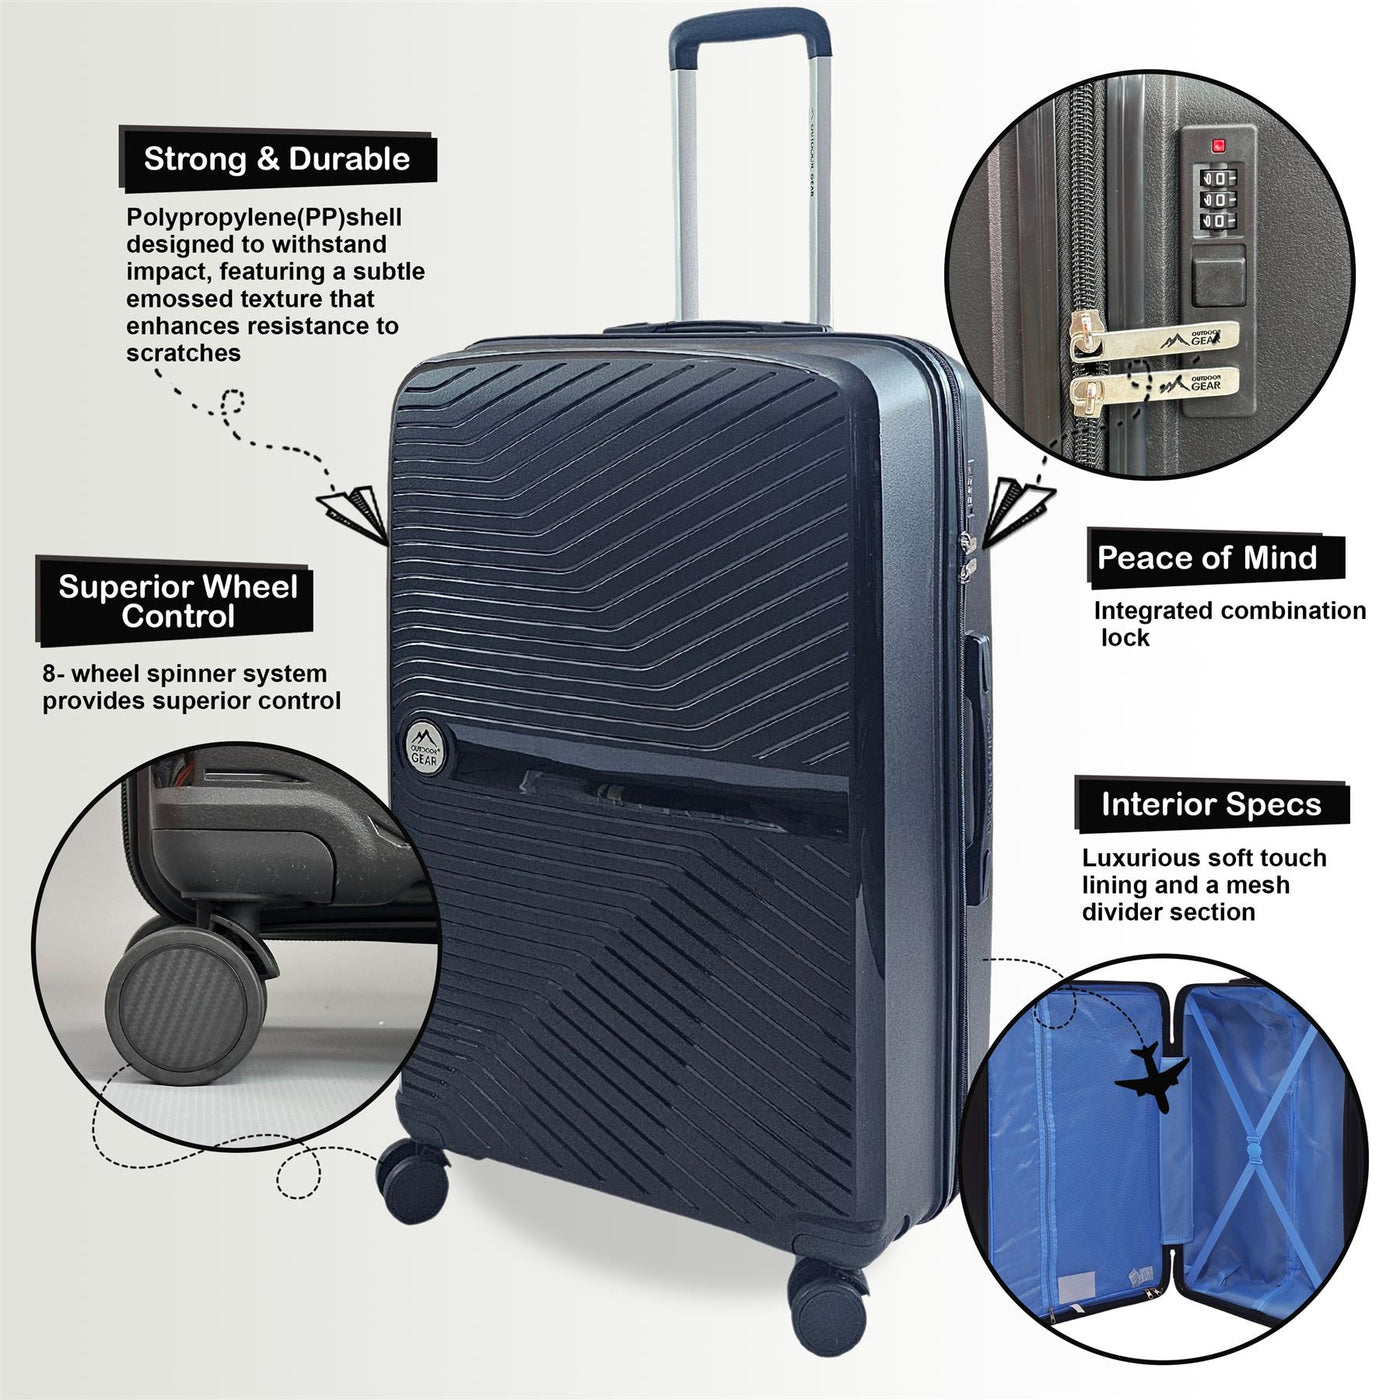 Cabin Suitcase 55 x 35 x 22 cm Hard Shell Luggage